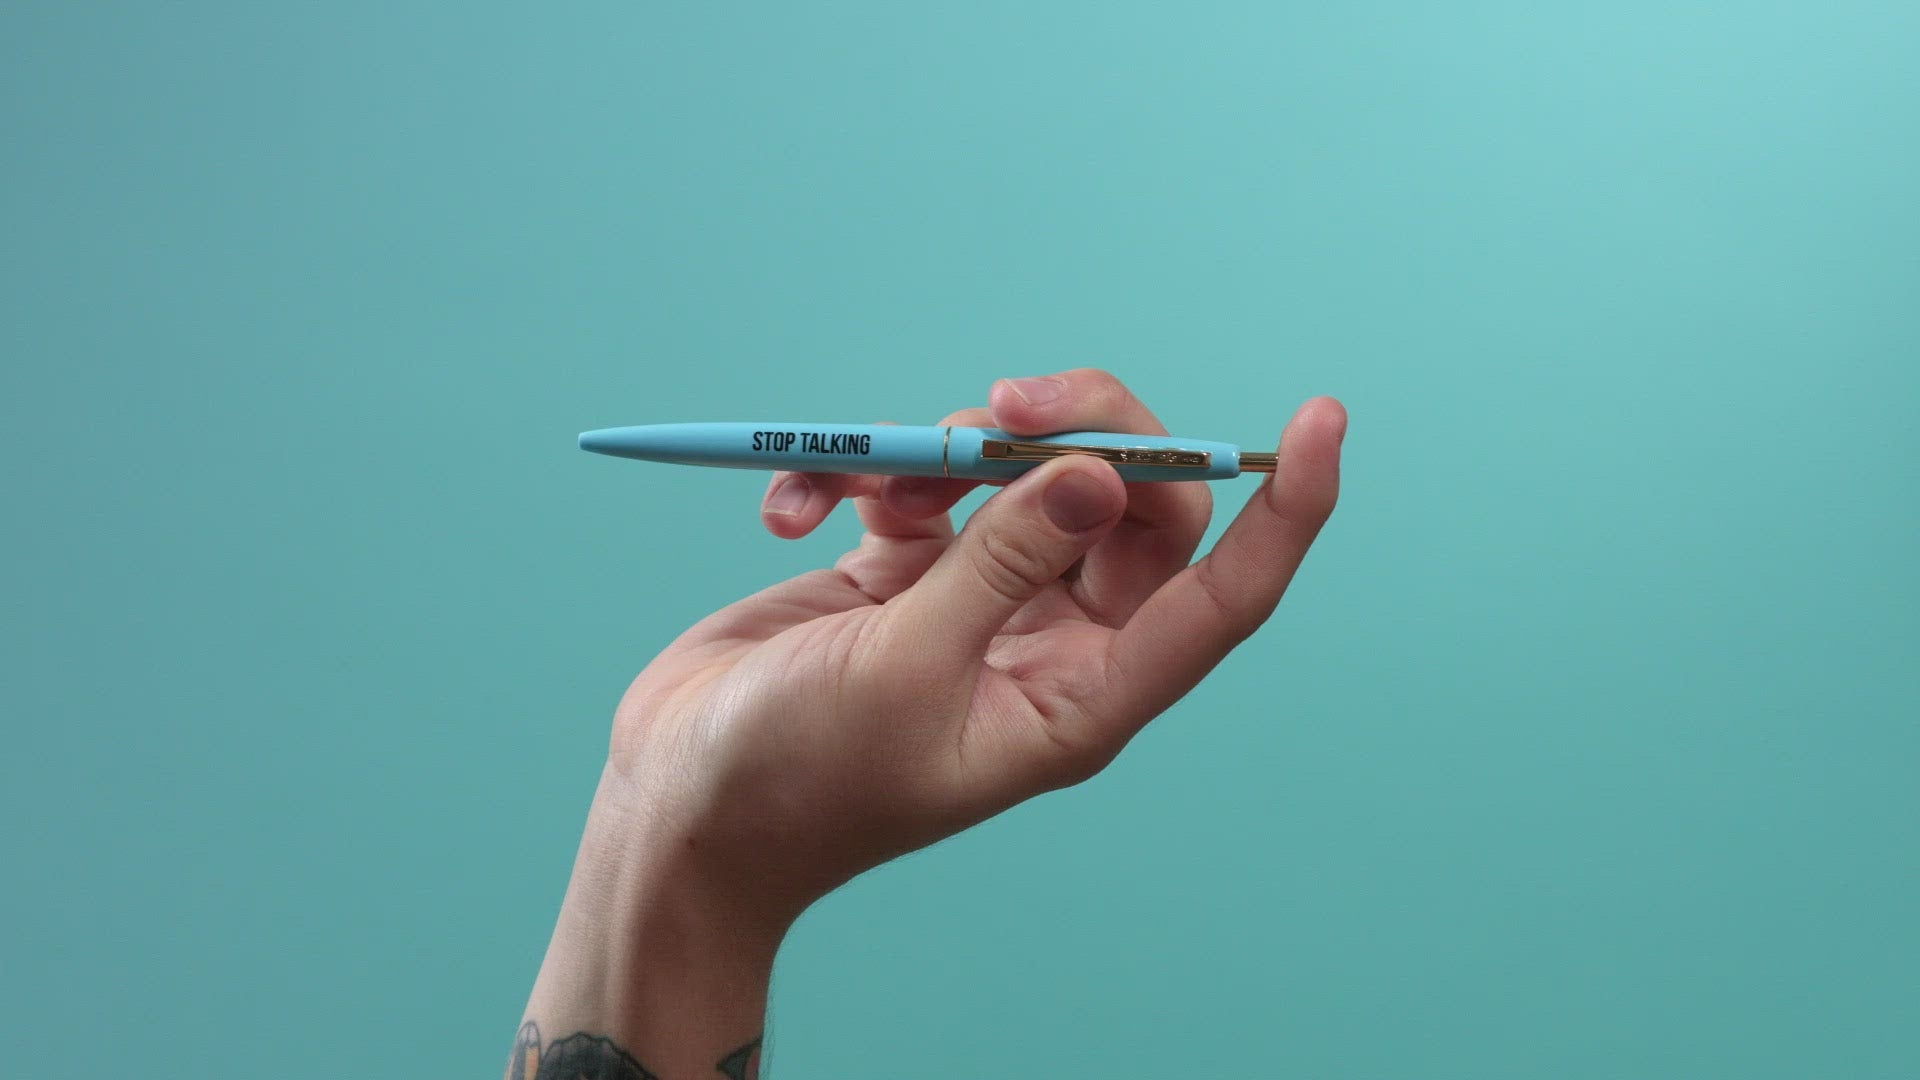 Fancy Pens Set For Women - Nice Pens - Luxury Pen For Boss Lady - Pretty  Cute Pens For Women - Decorative Writing Pens For Journaling - Girl Boss  Inspirational Motivational Pens - Executiv 